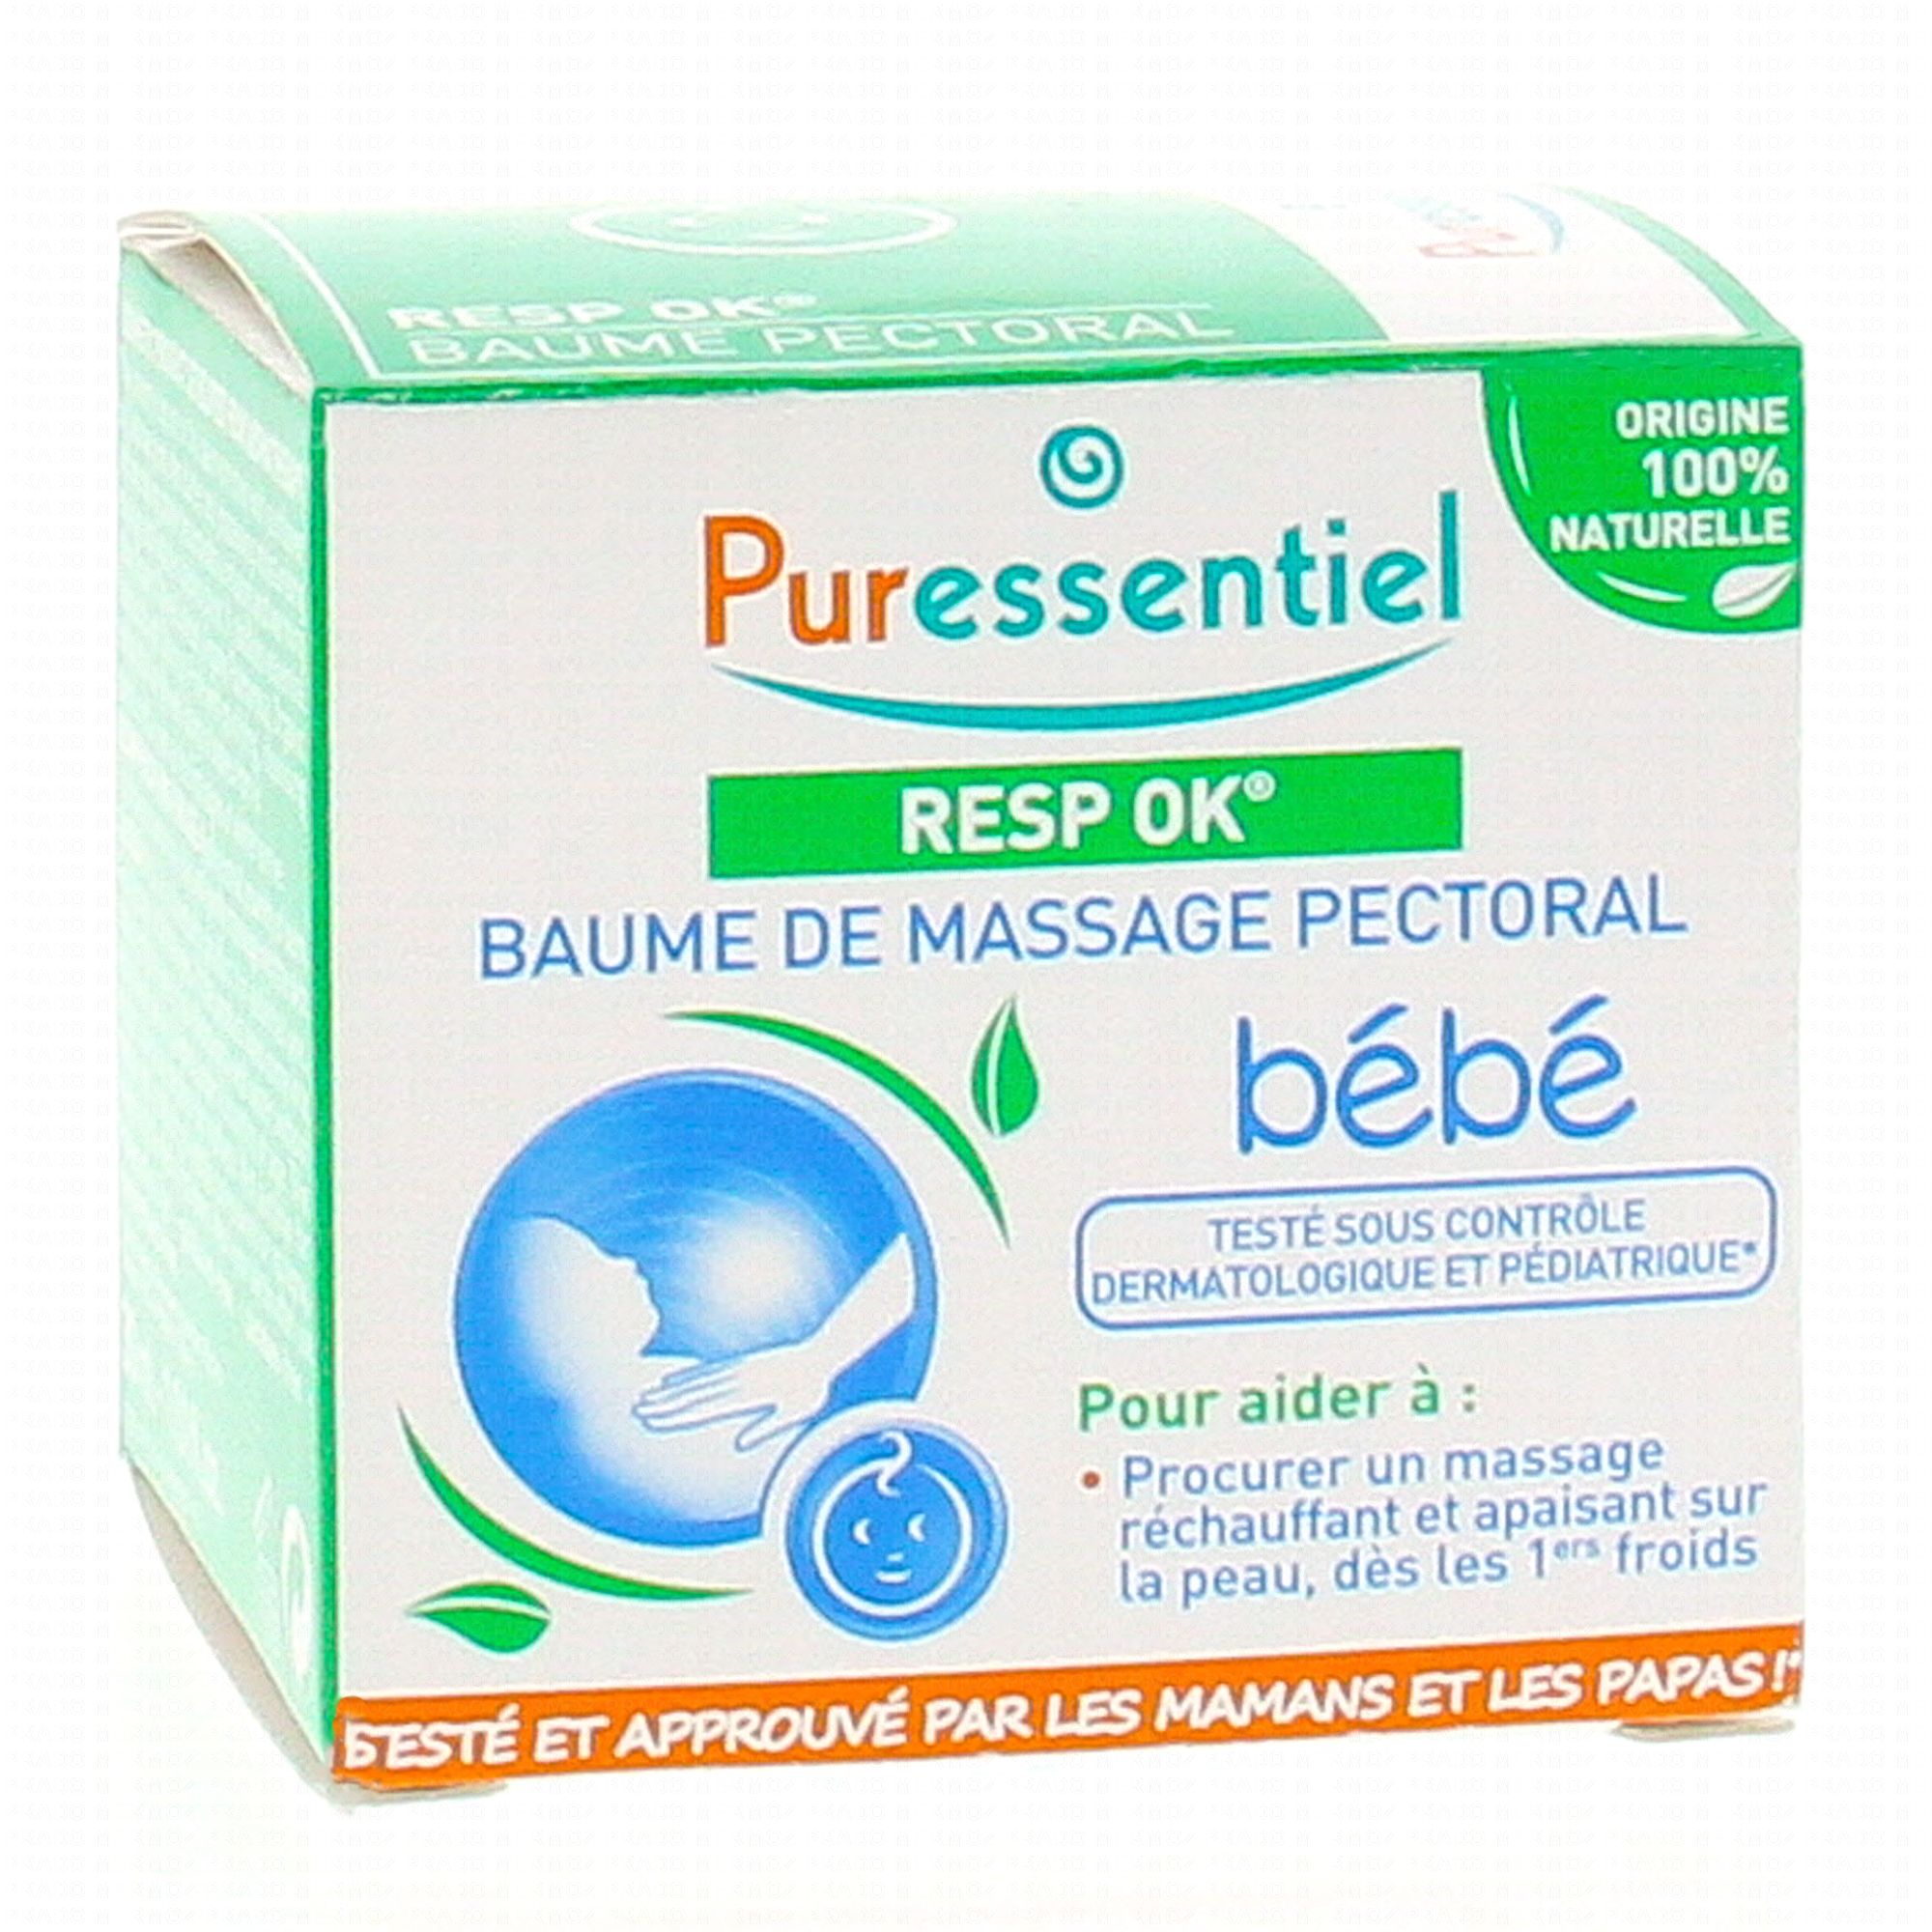 PURESSENTIEL Resp ok Baume de massage pectoral bébé pot 30ml -  Parapharmacie Prado Mermoz